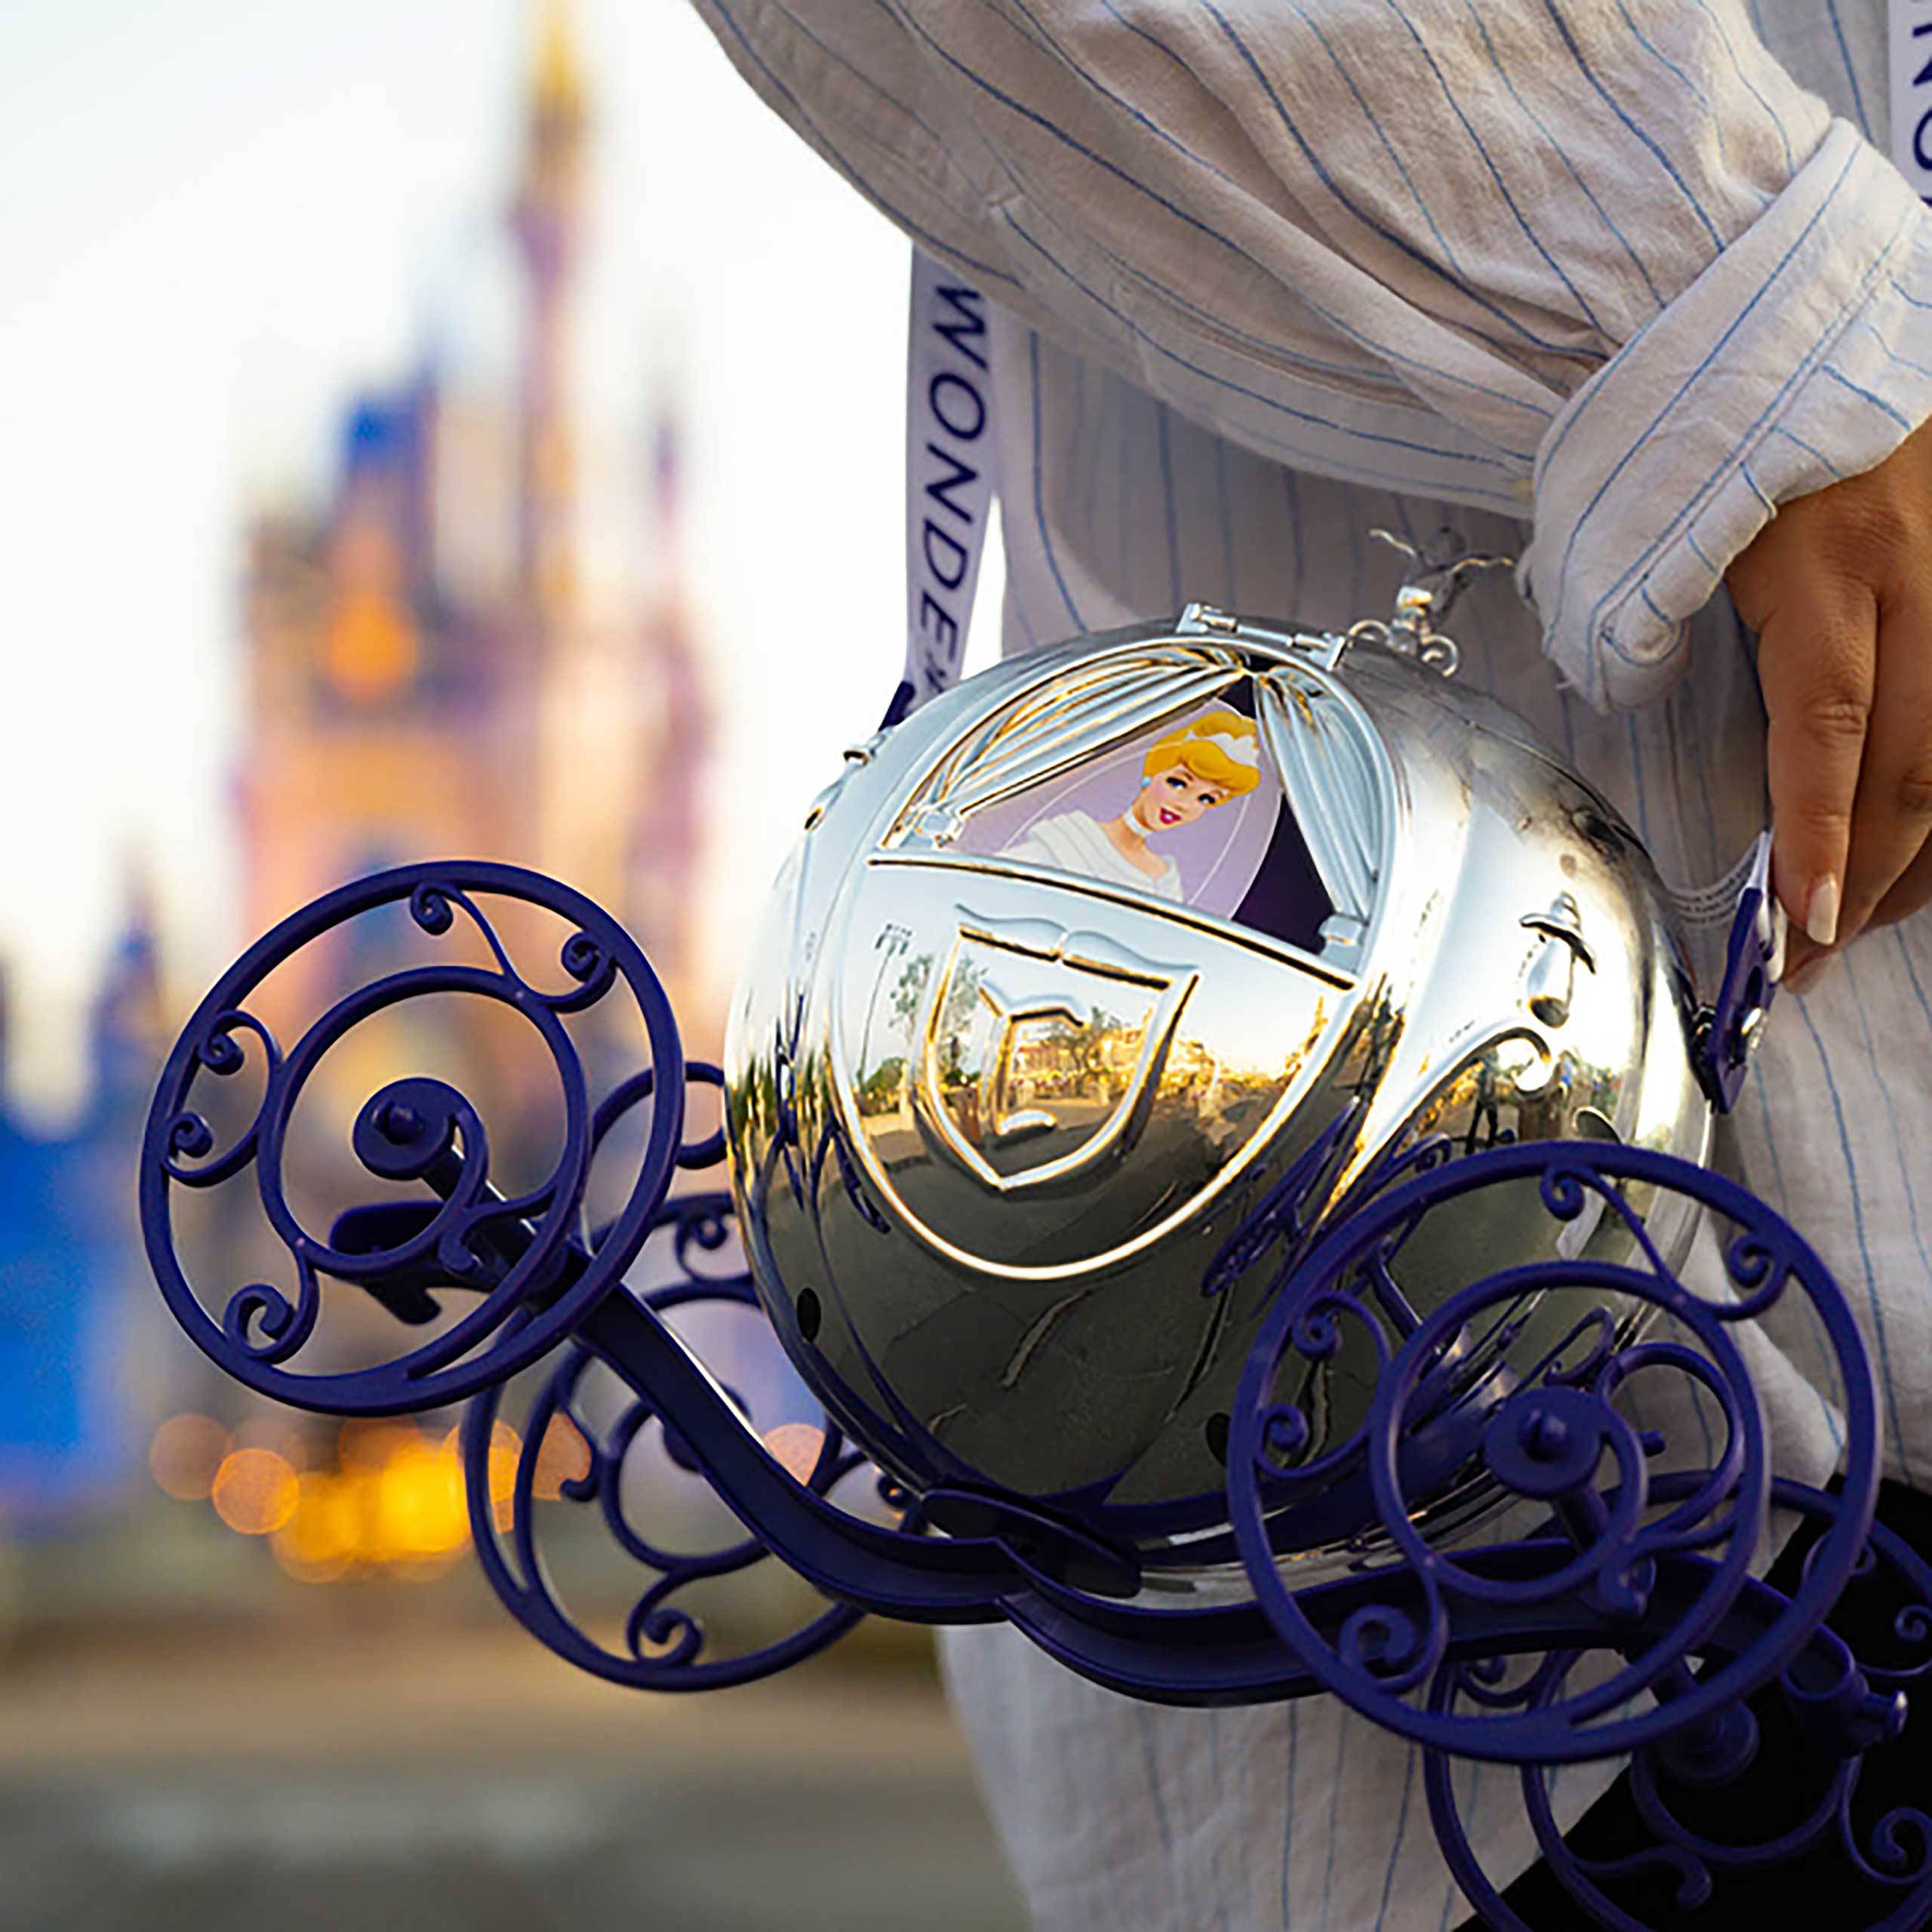 Disney100 Cinderella Coach Popcorn Bucket arrives at Magic Kingdom on May 11